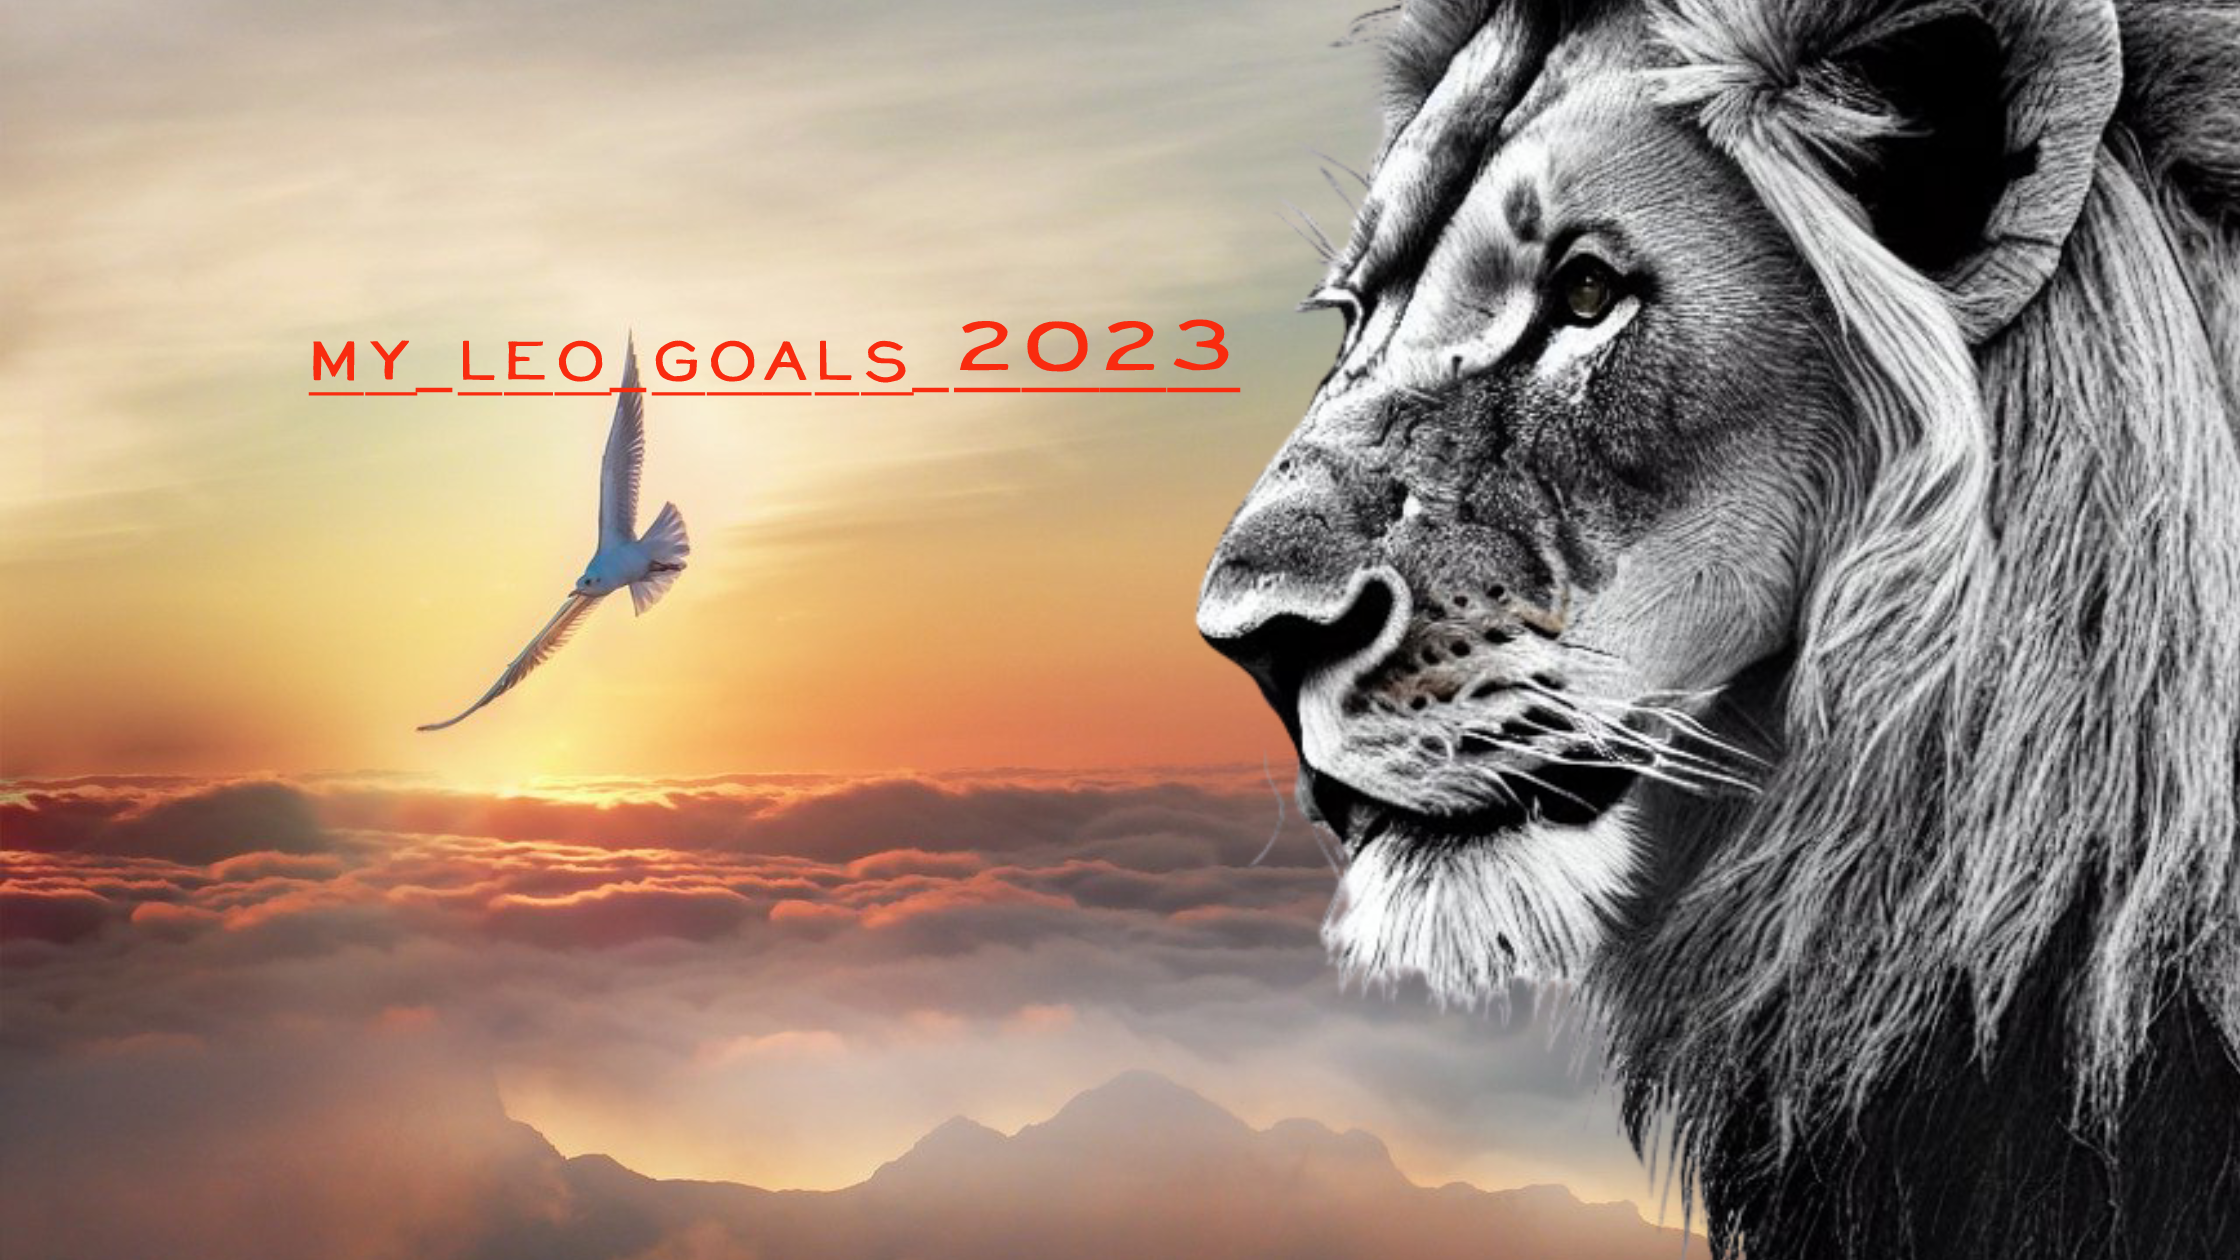 @brando28/my-leo-goals-for-2023-staying-focused